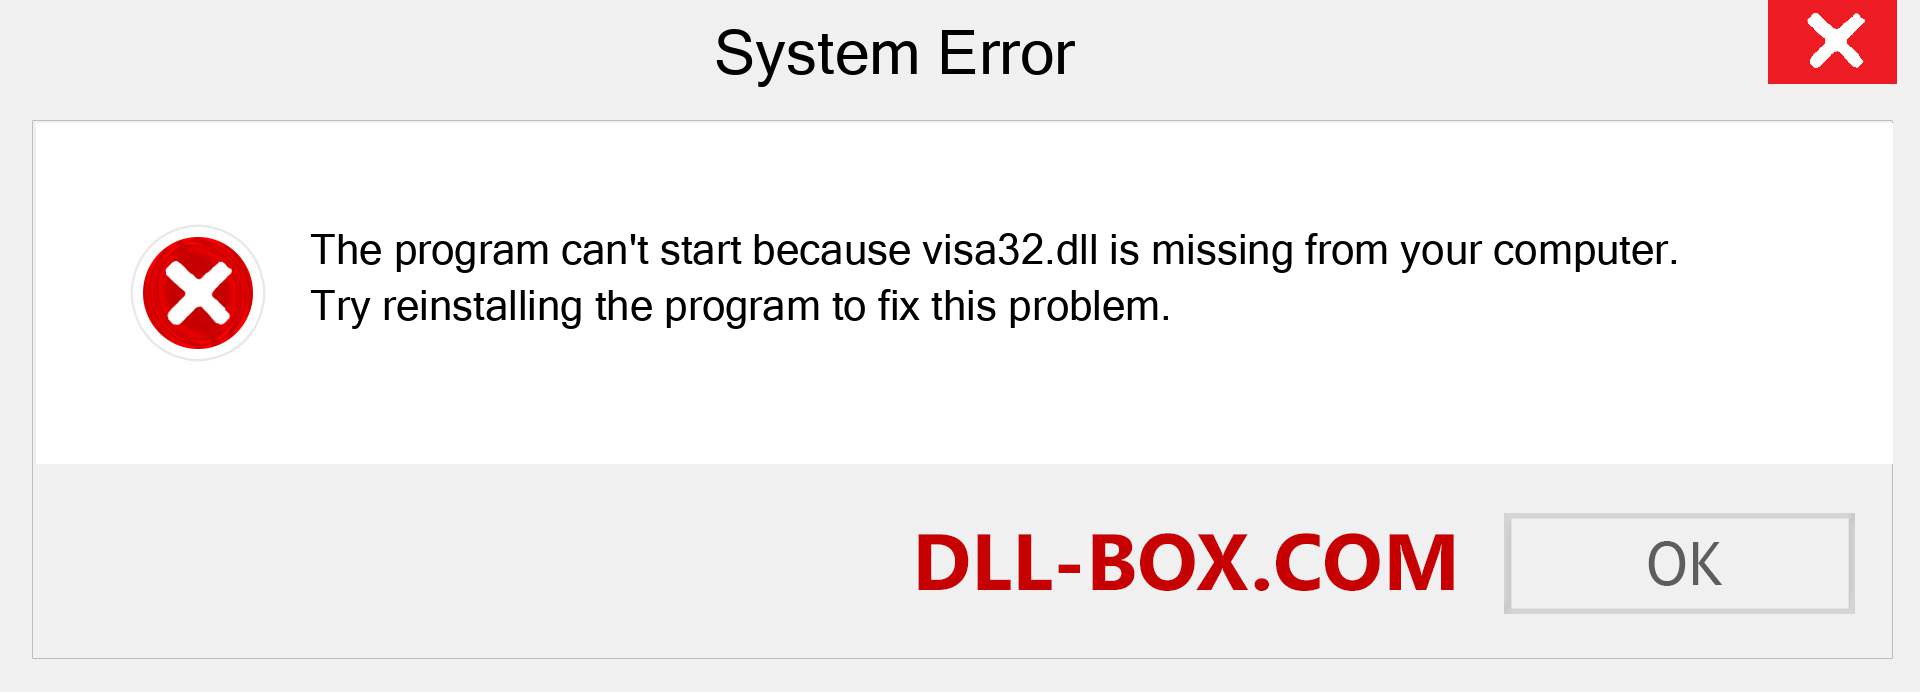  visa32.dll file is missing?. Download for Windows 7, 8, 10 - Fix  visa32 dll Missing Error on Windows, photos, images